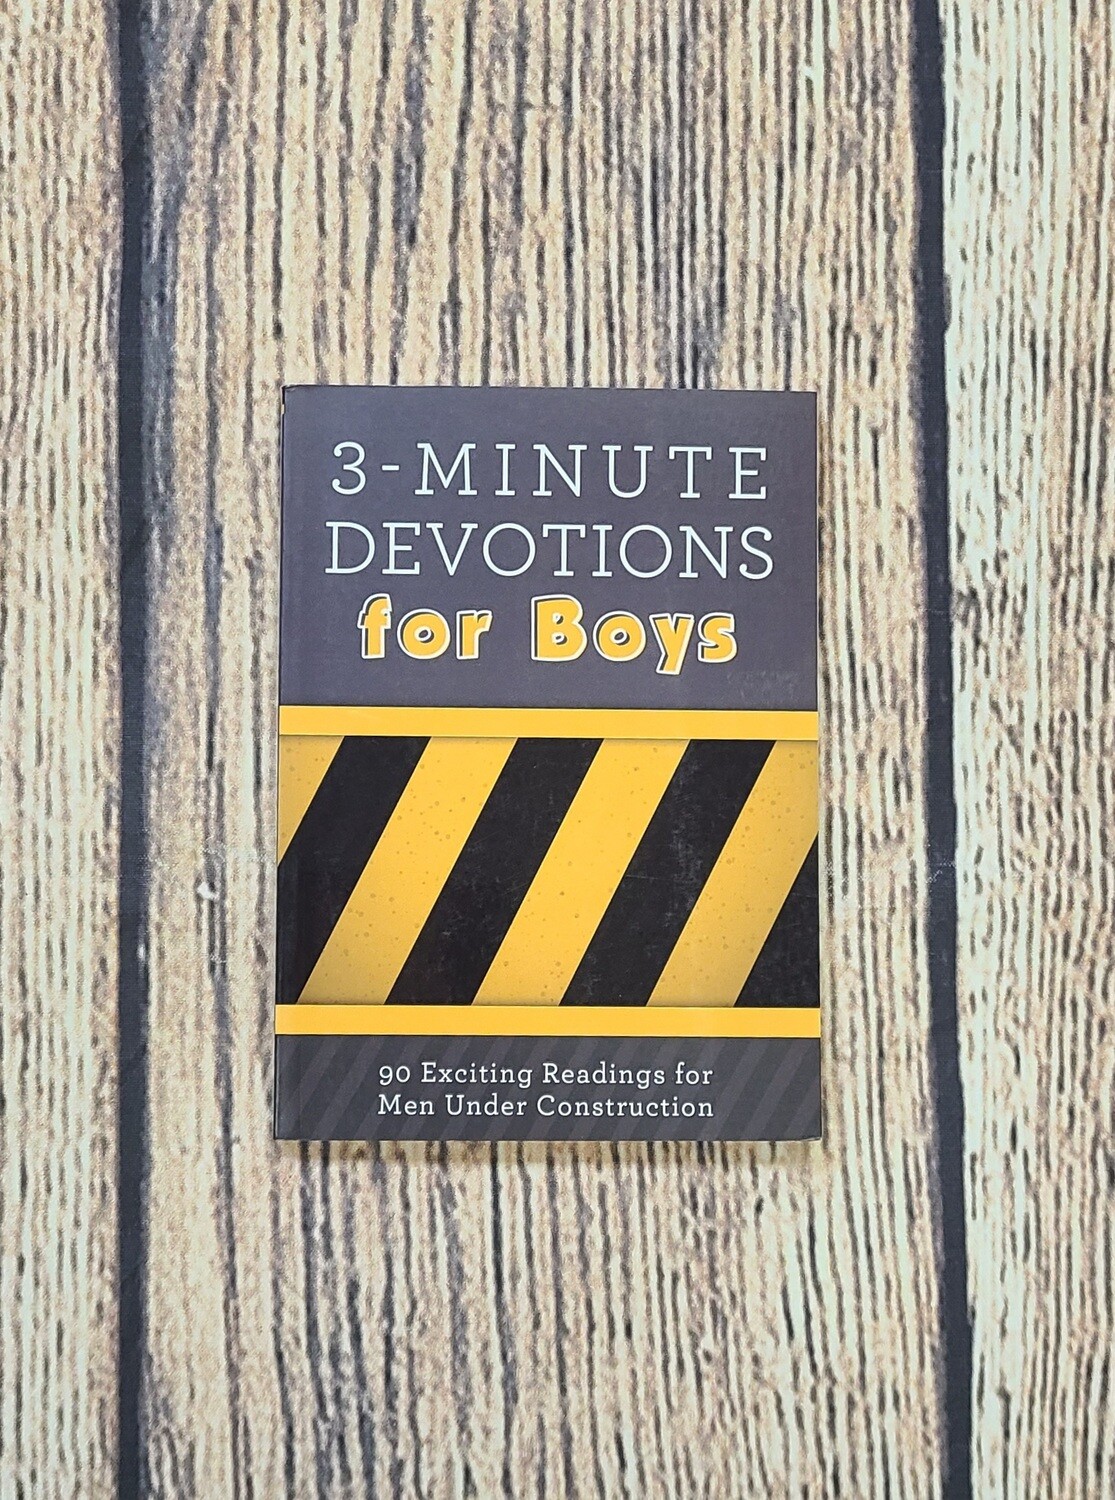 3-Minute Devotions for Boys by Tim Baker